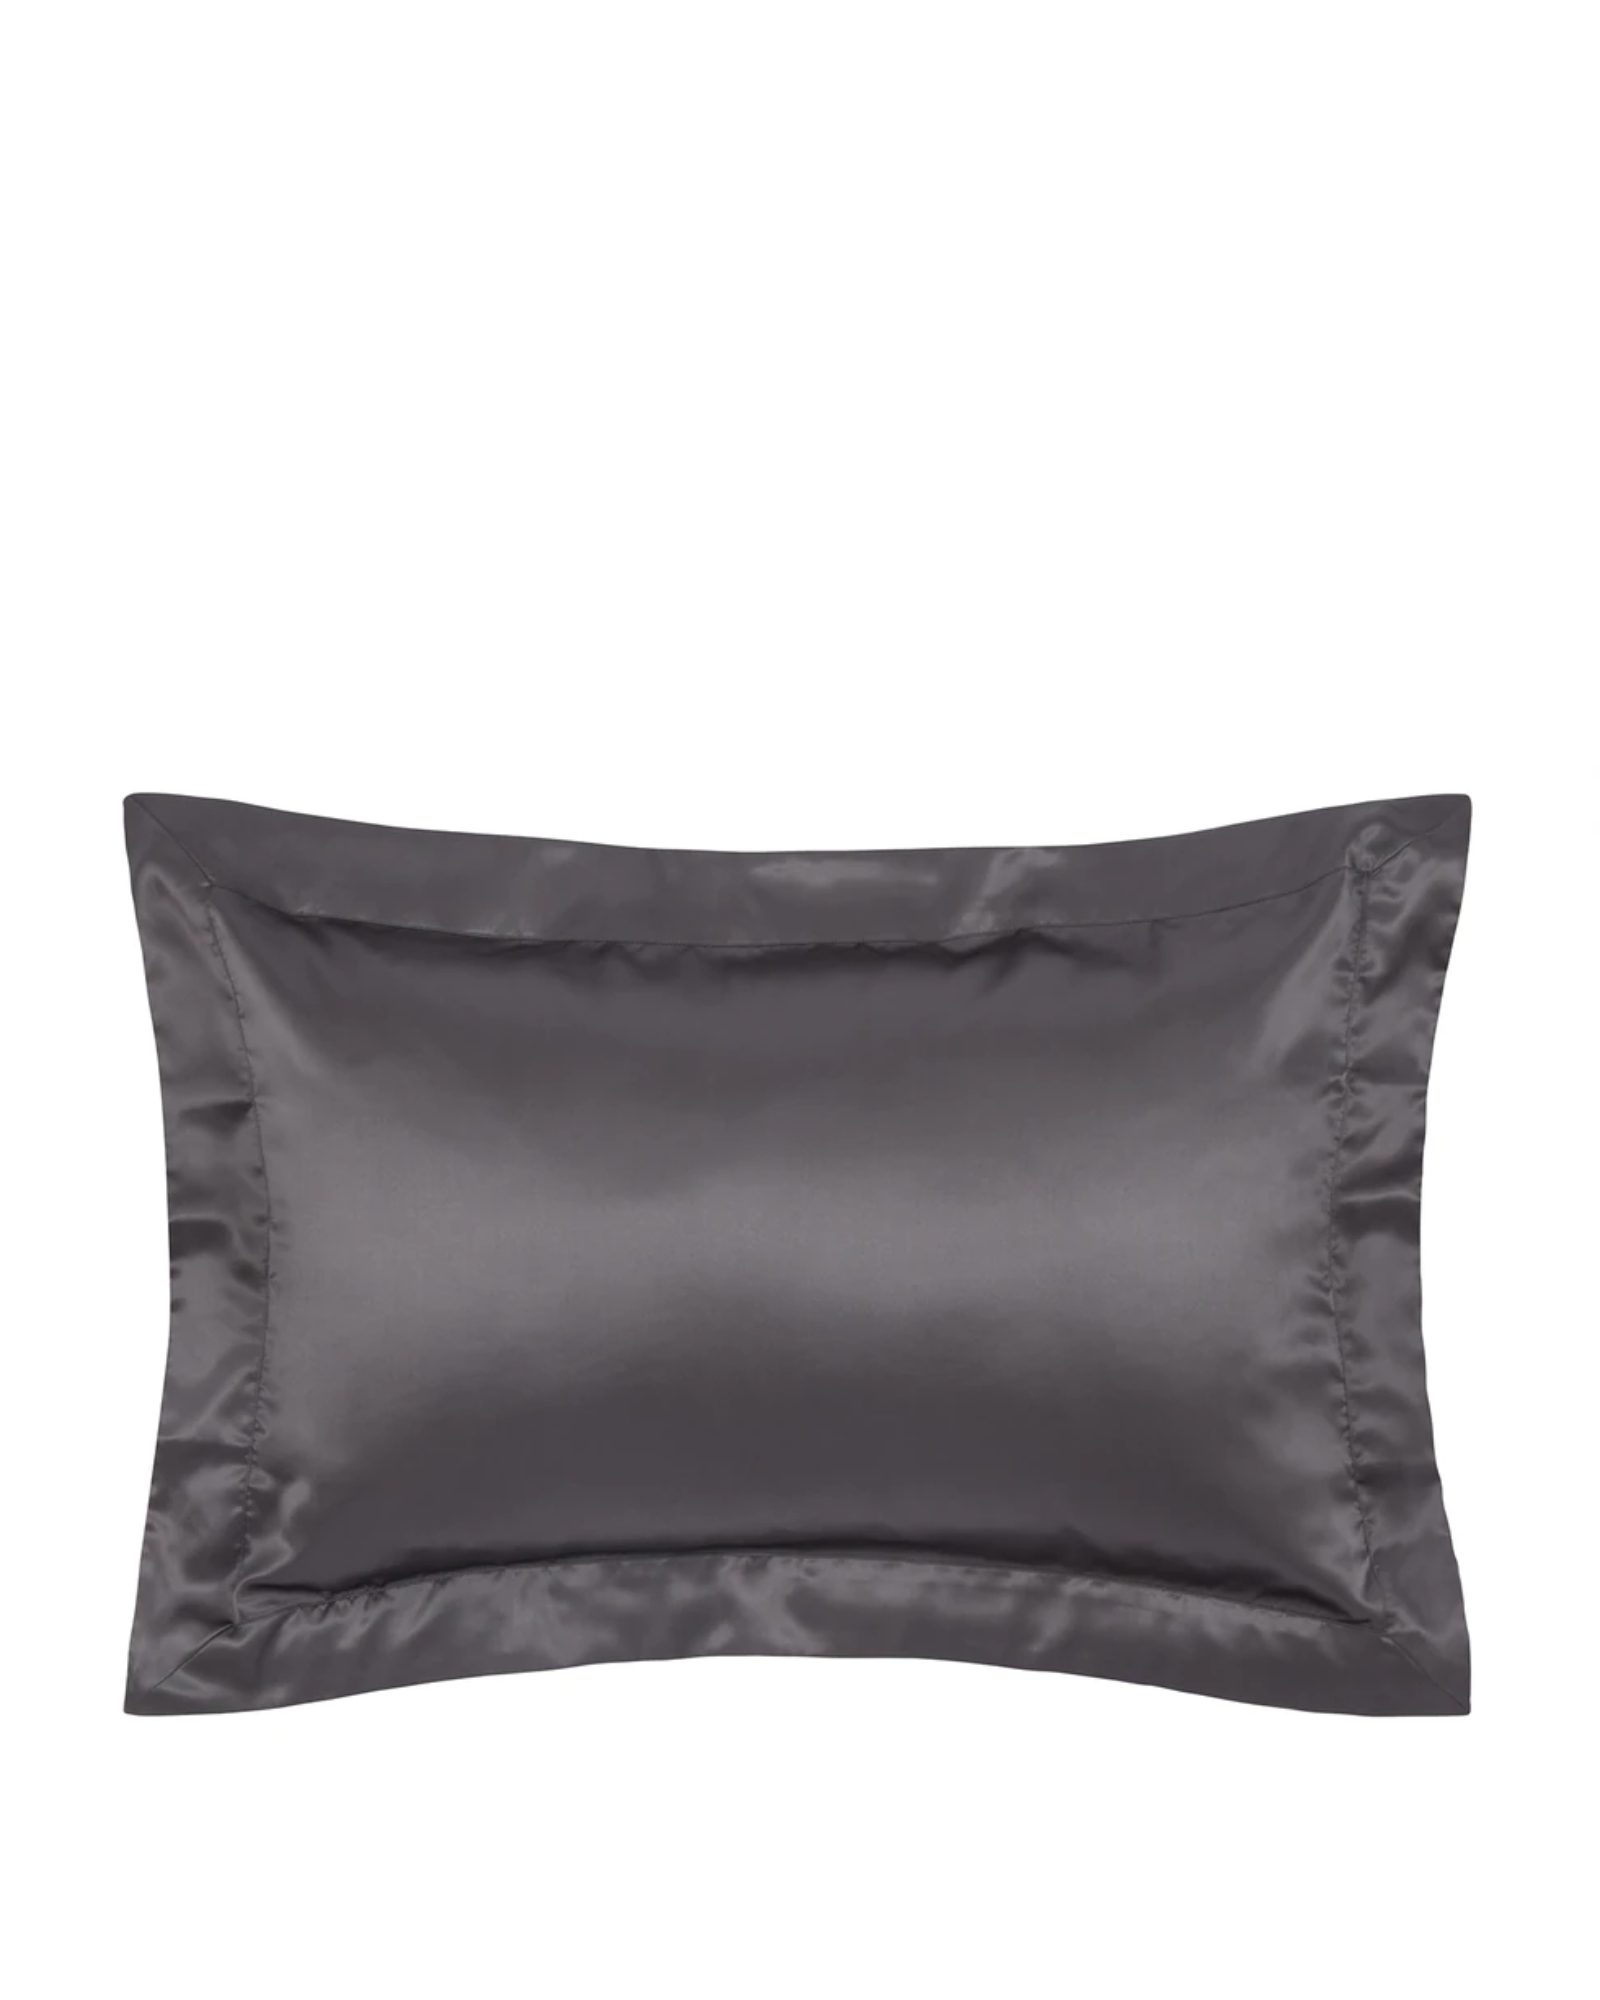 Gingerlily - Pillowcase SILK charcoal - 50x75 cm - charcoal